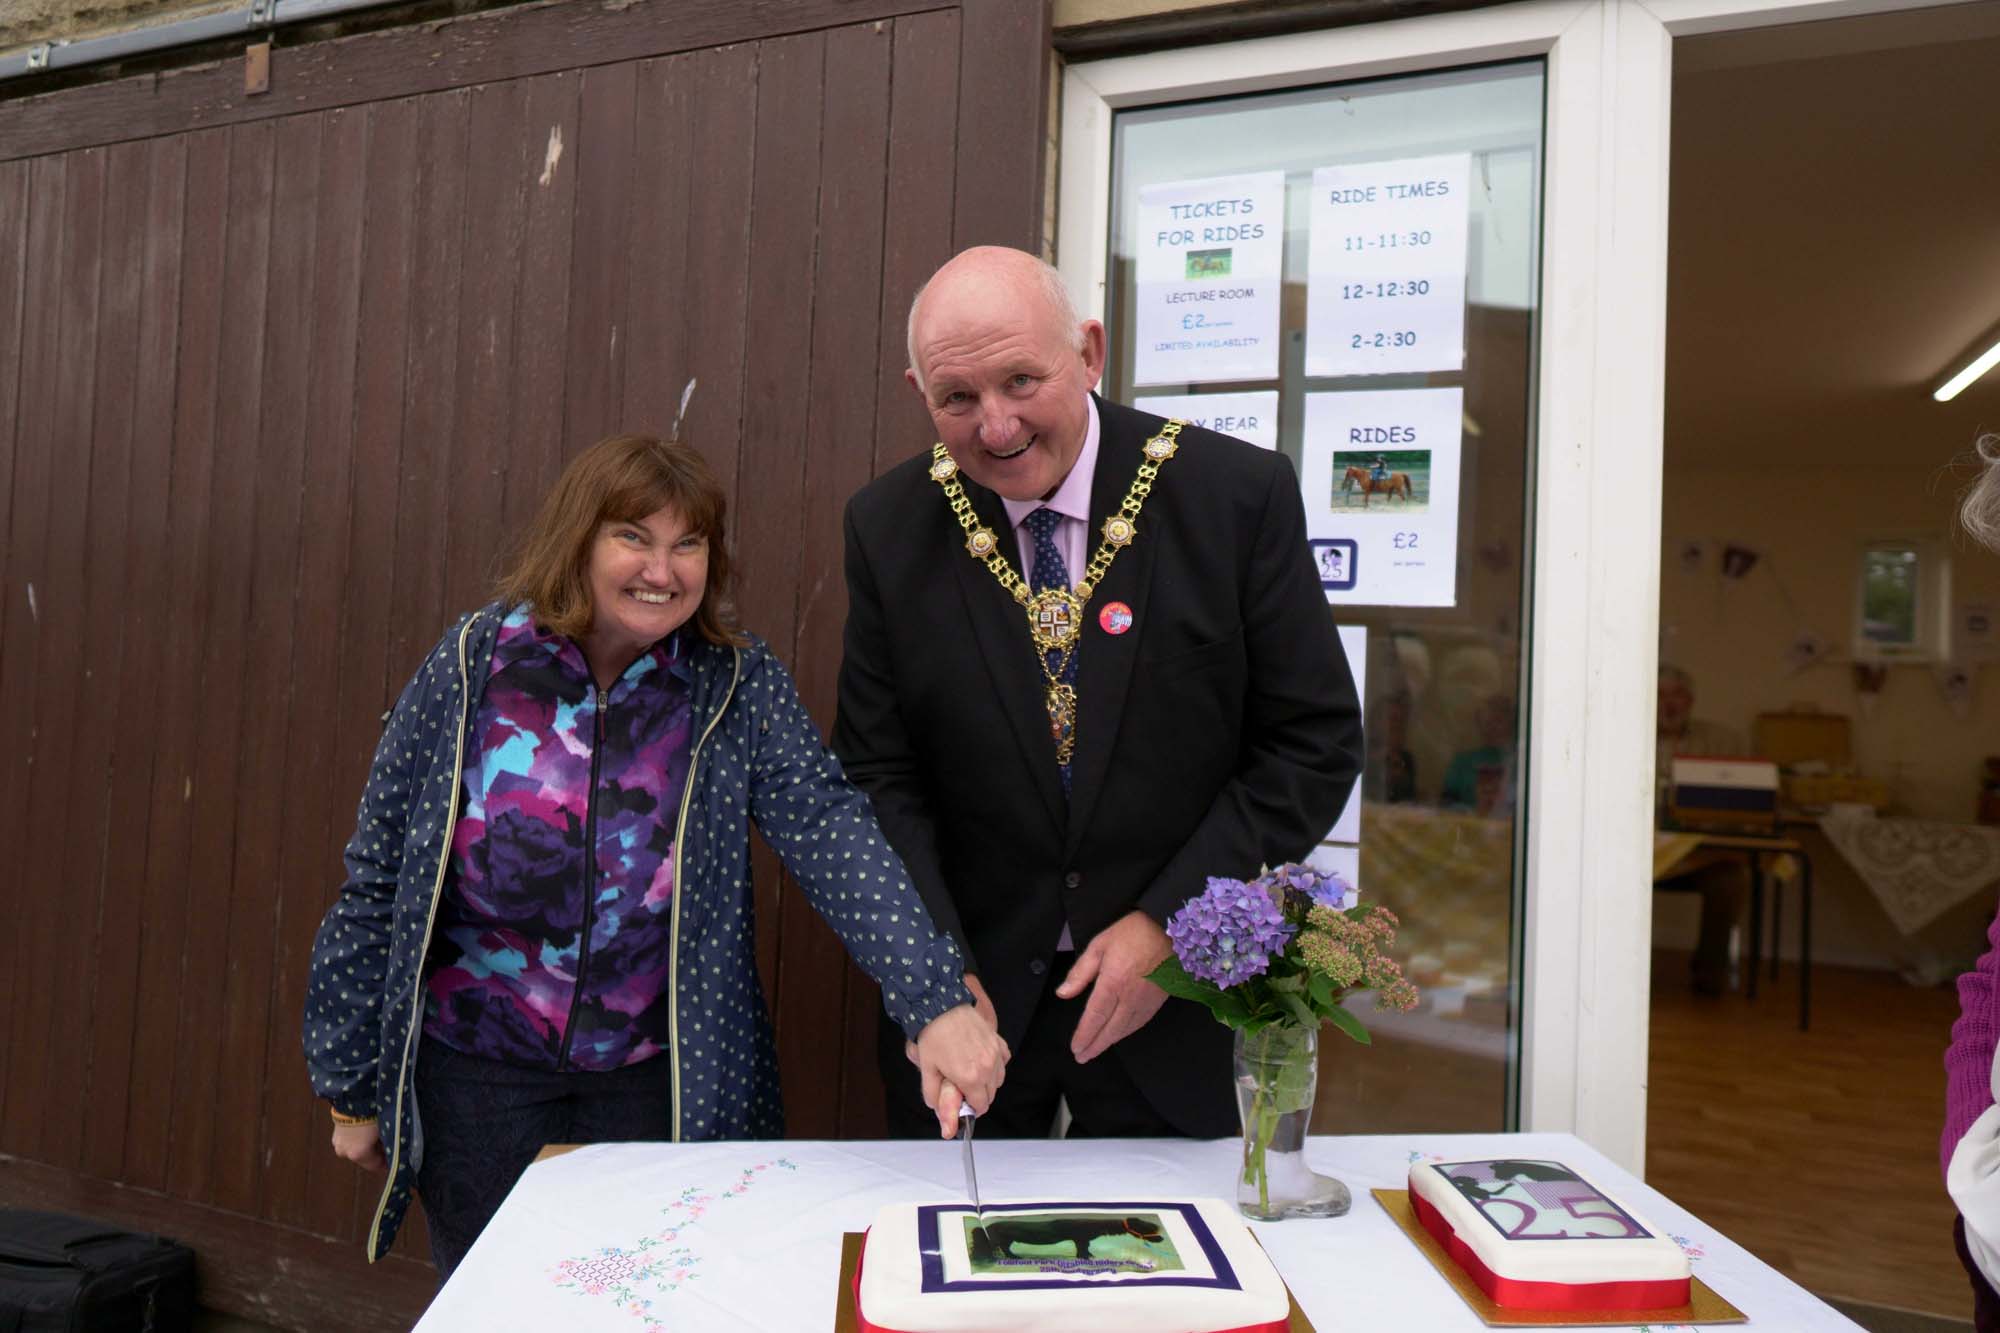 Victoria Thomas (Rider) with the Mayor of Harrogate, Cllr Stuart Martin, cutting the celebration cake